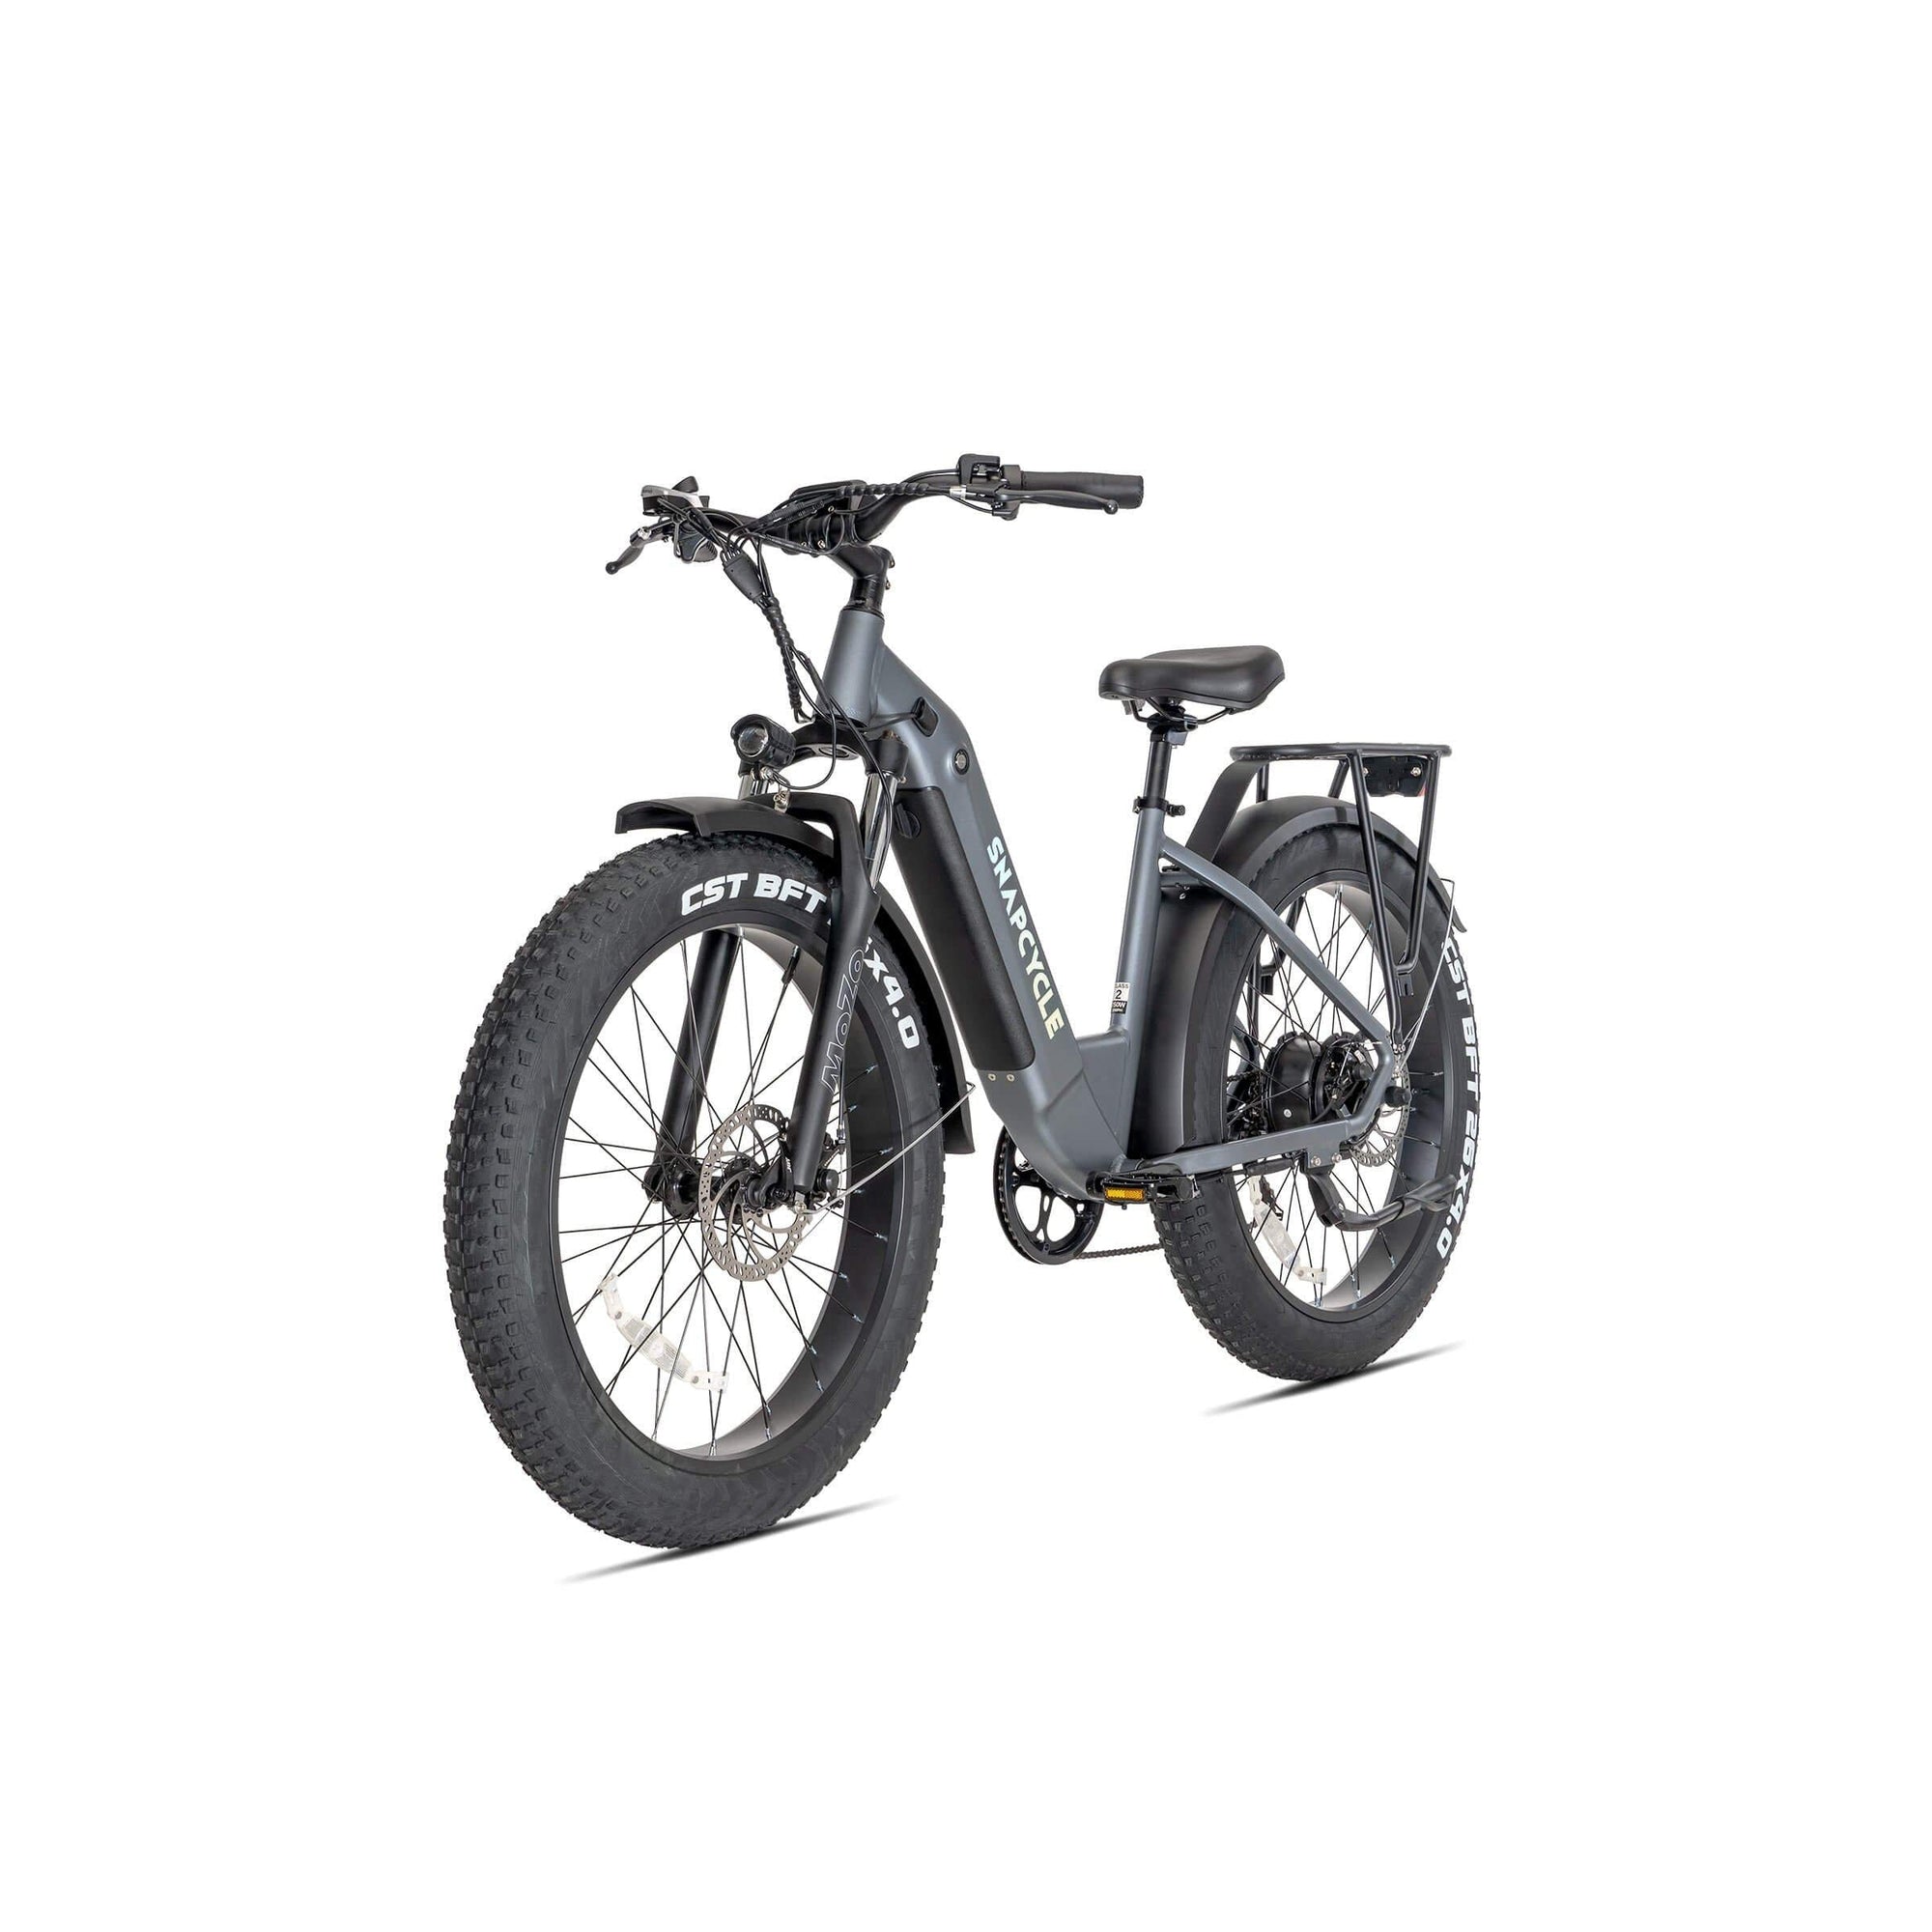 Snapcycle R1 750W Step-Thru Fat Tire Electric Bike